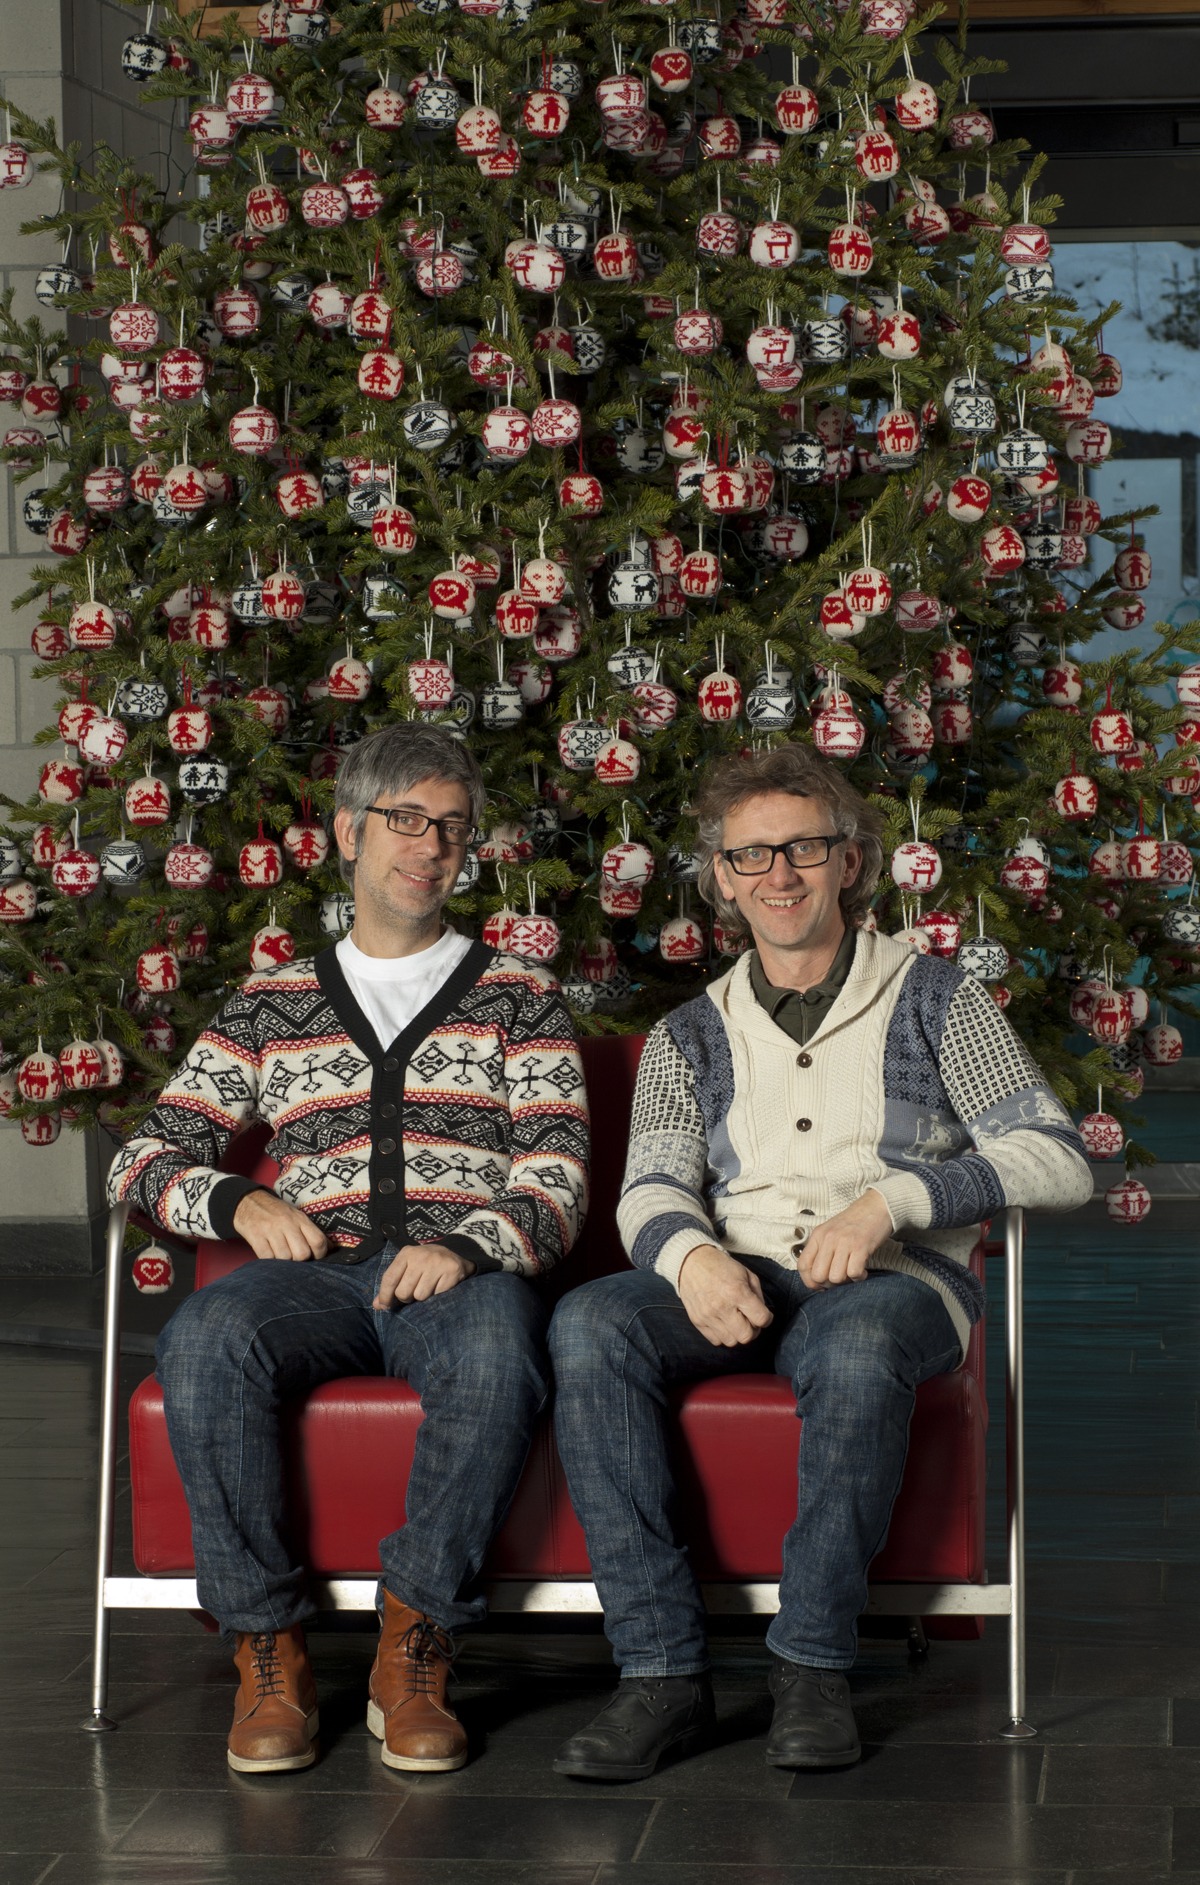 Maihaugens juletre 2015, pyntet med strikkede julekuler av Arne og Carlos. Her sitter de foran treet. Foto: Camilla Damgård.